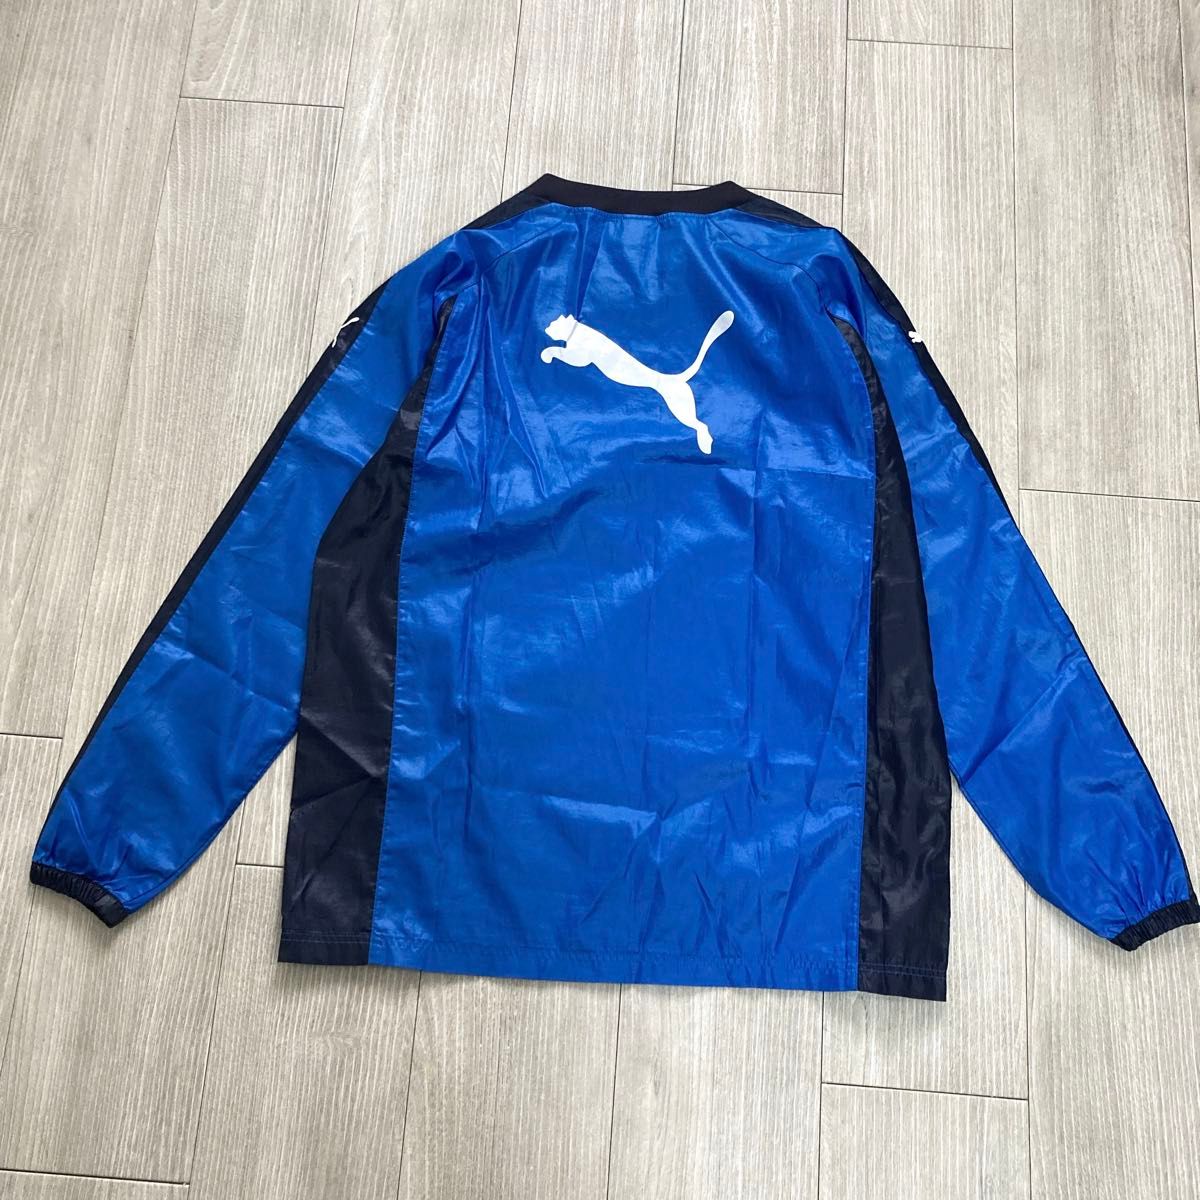 PUMA プーマ キッズ スポーツウェア 160 長袖 プルオーバー 刺繍ロゴ ブルー系 (p027) 